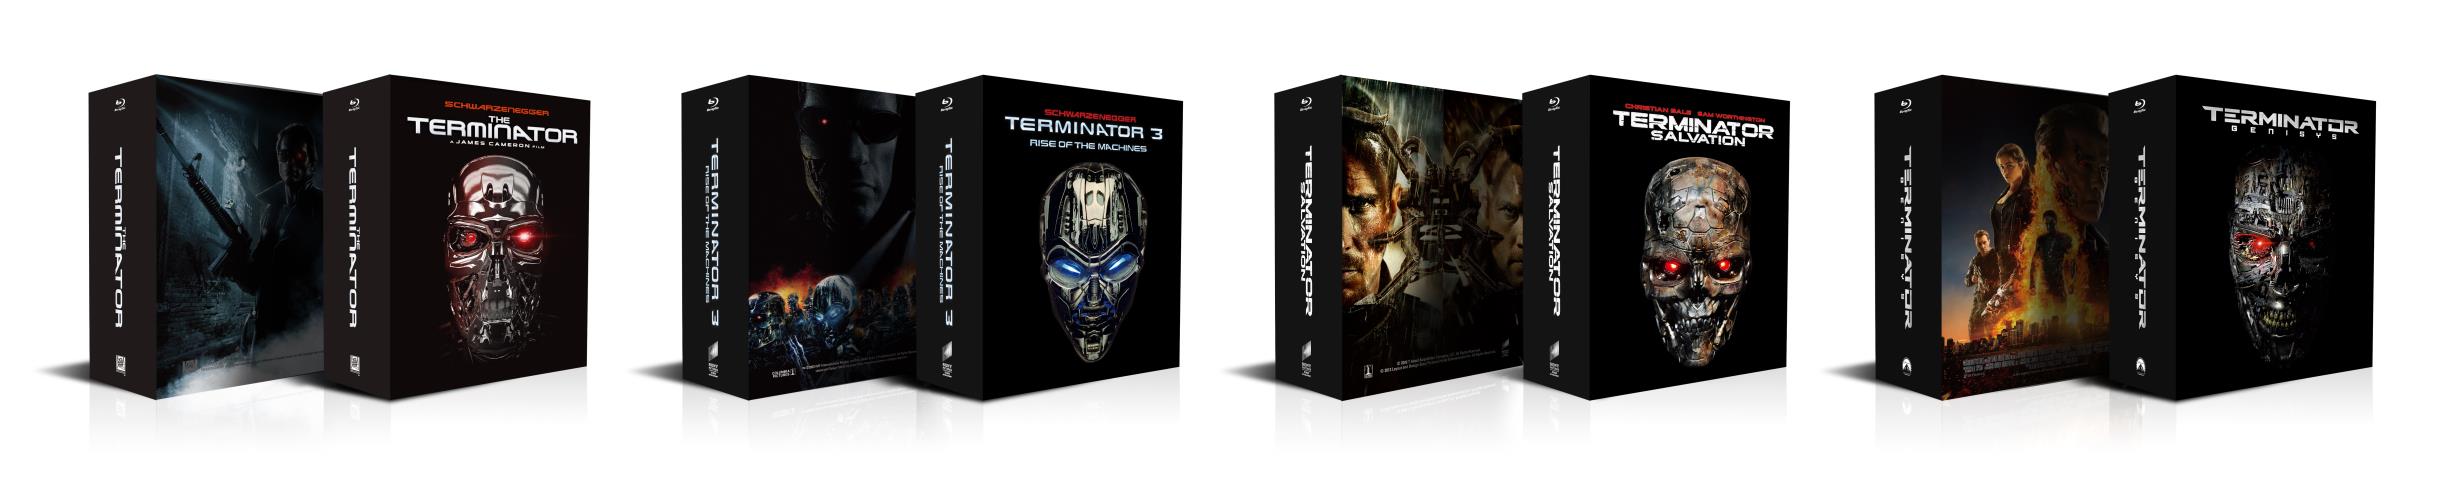 Terminator series Boxset